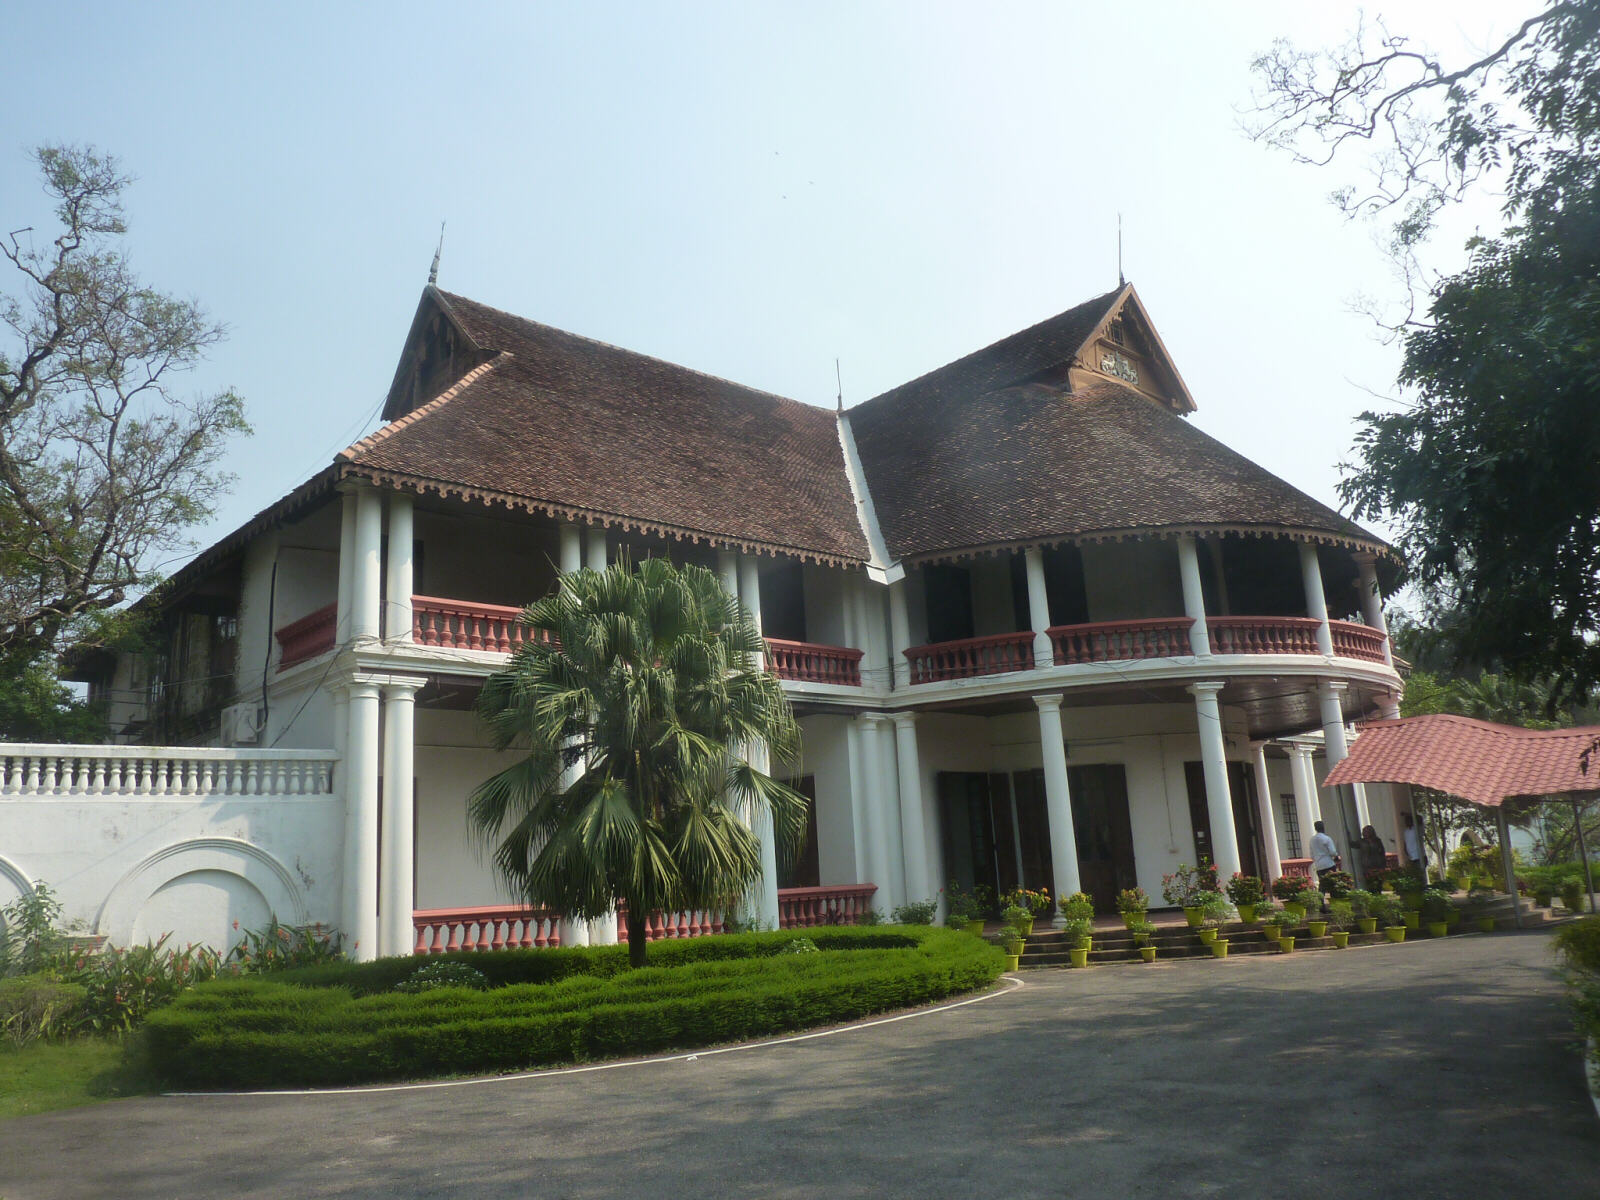 The former British Residency at Kollam, Kerala, India